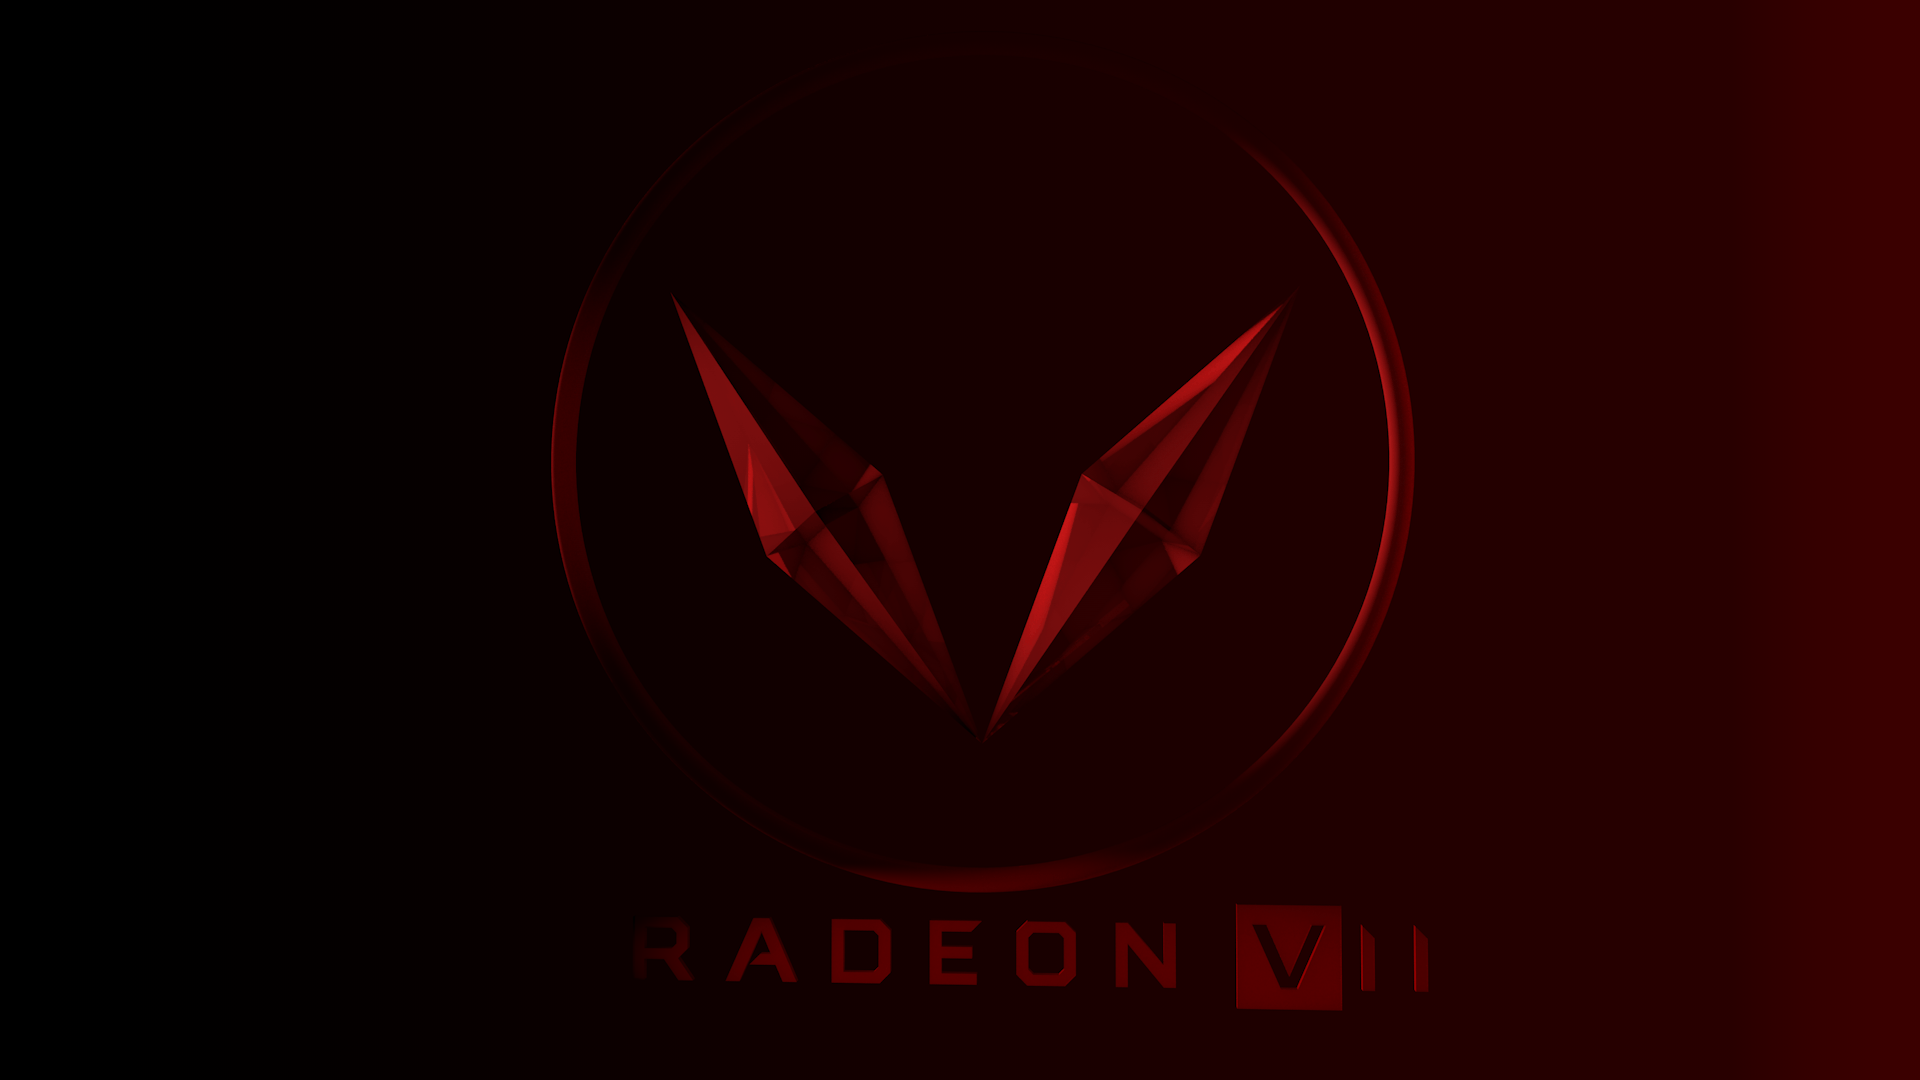 Radeon 7 wallpaper I made :)